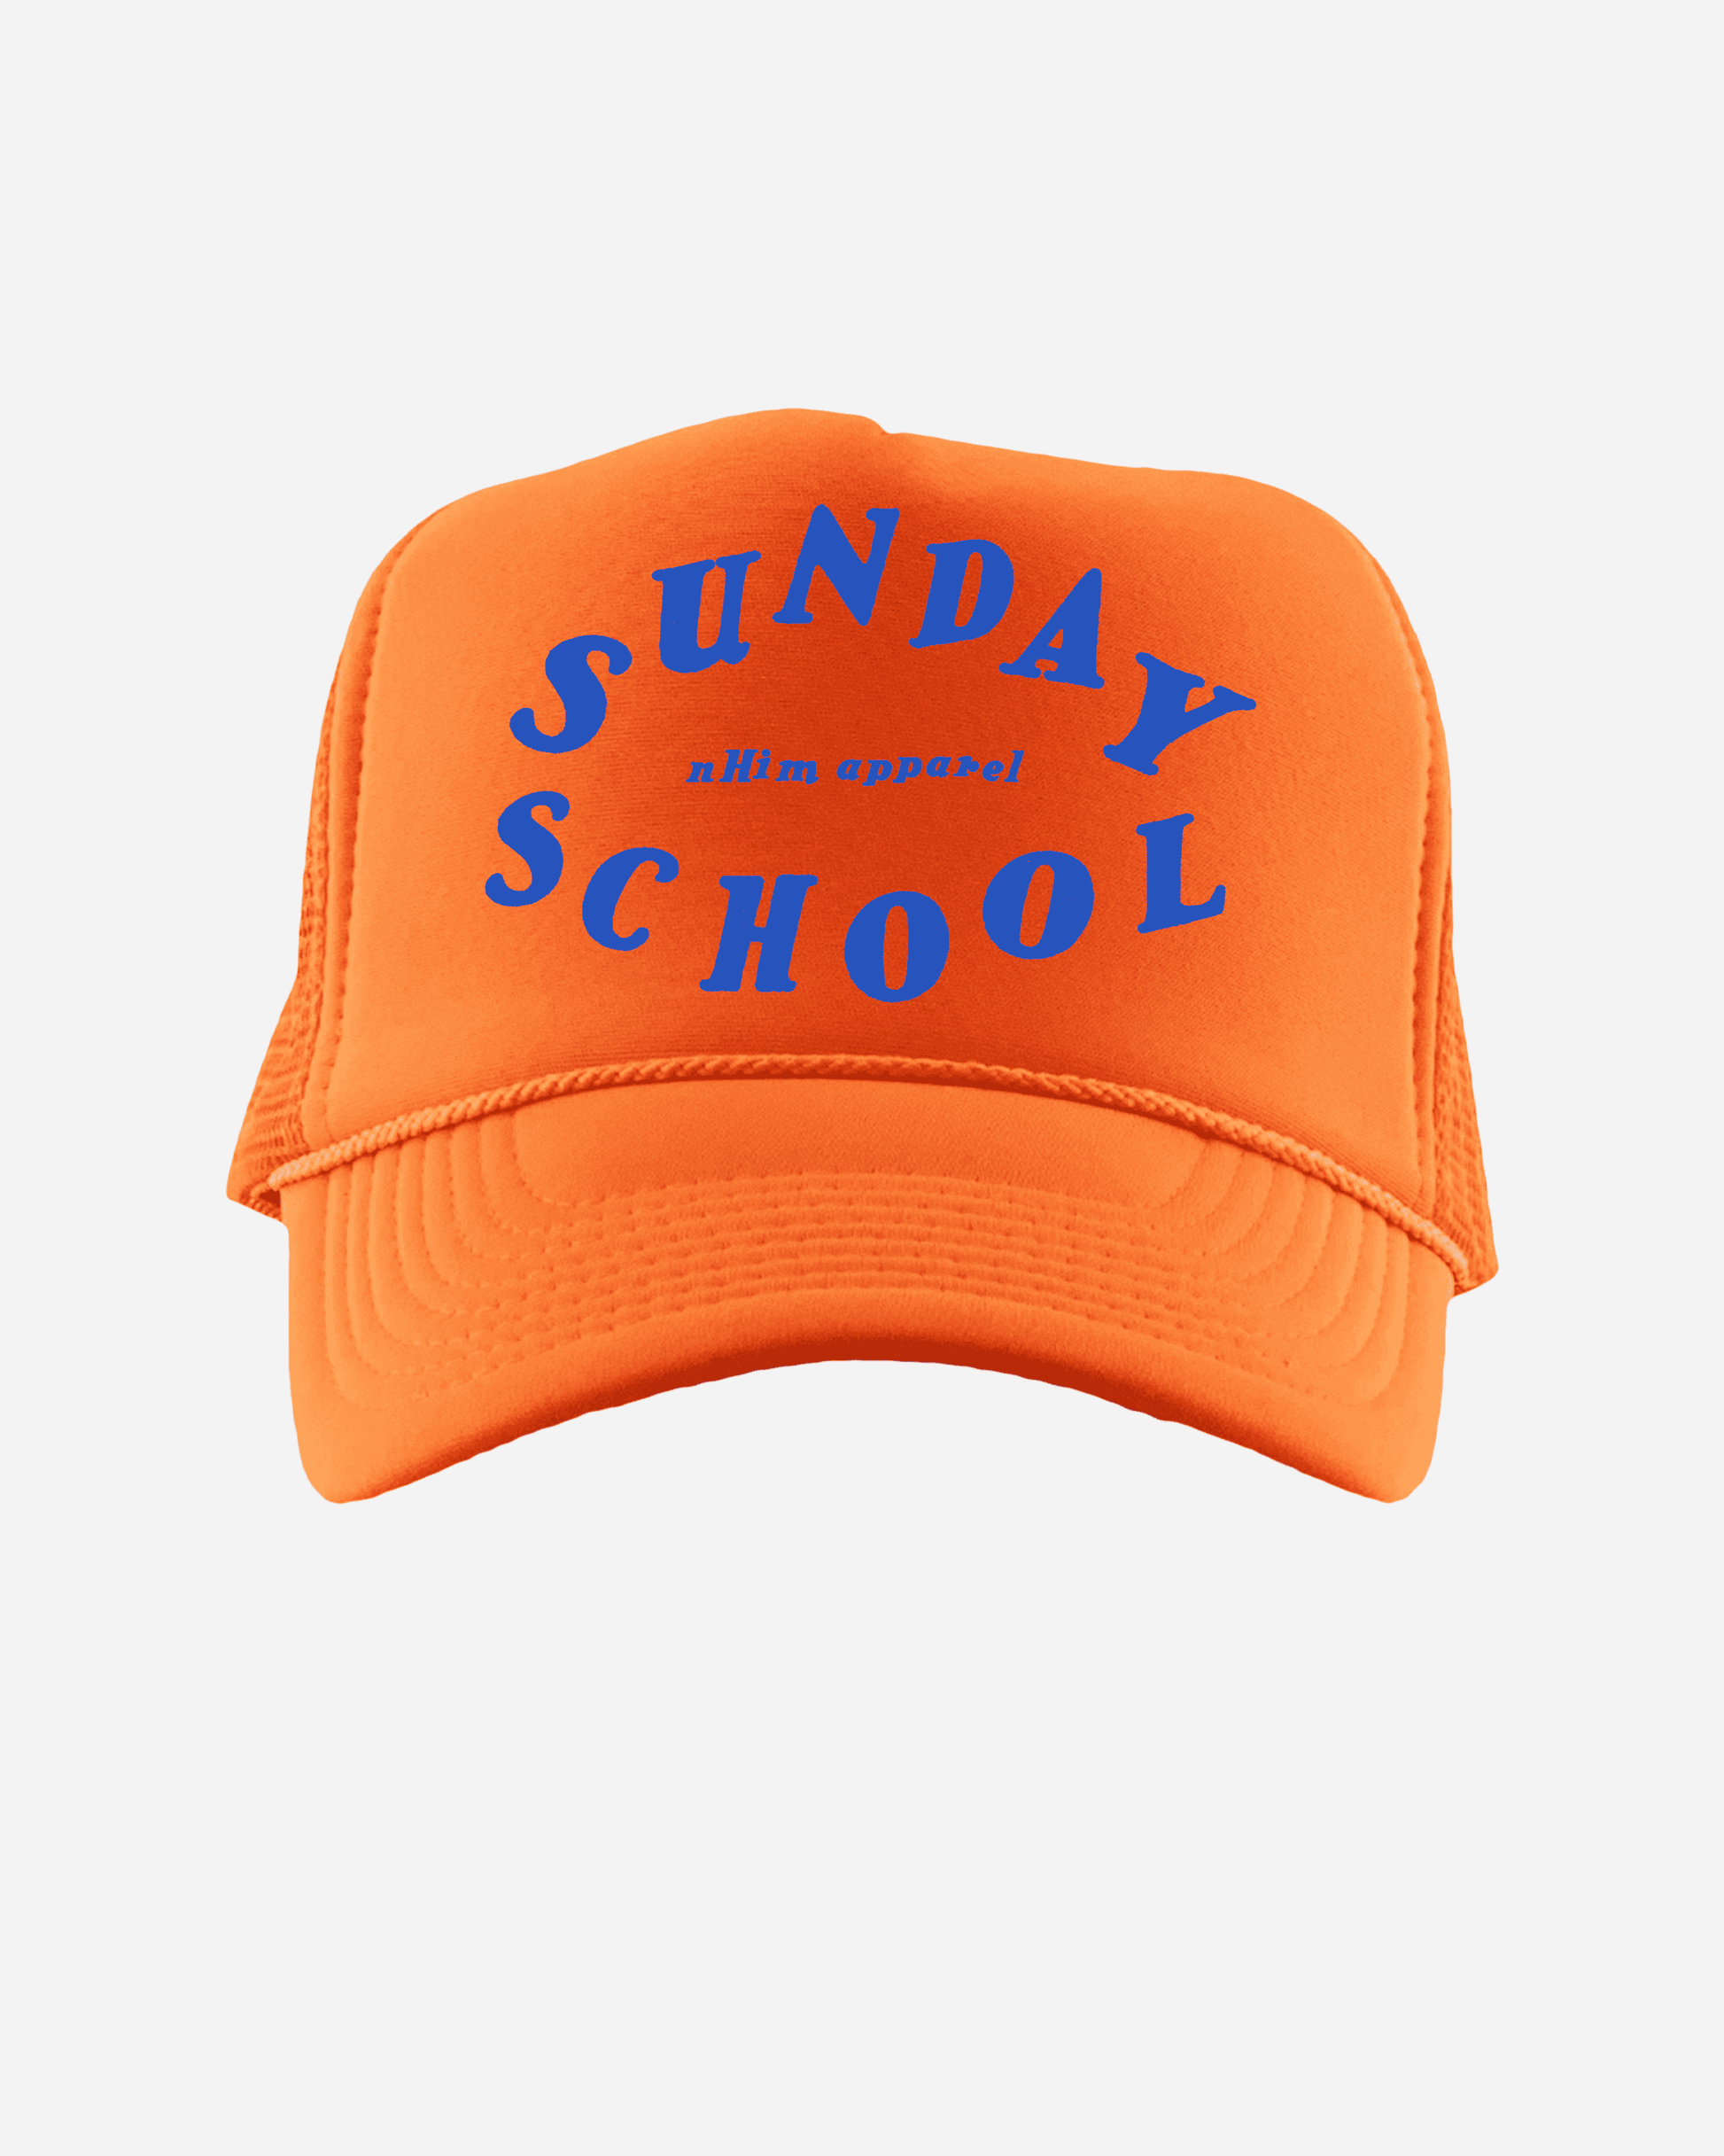 Orange Trucker hat Sunday Every Day by NHIM APPAREL Christian clothing brand